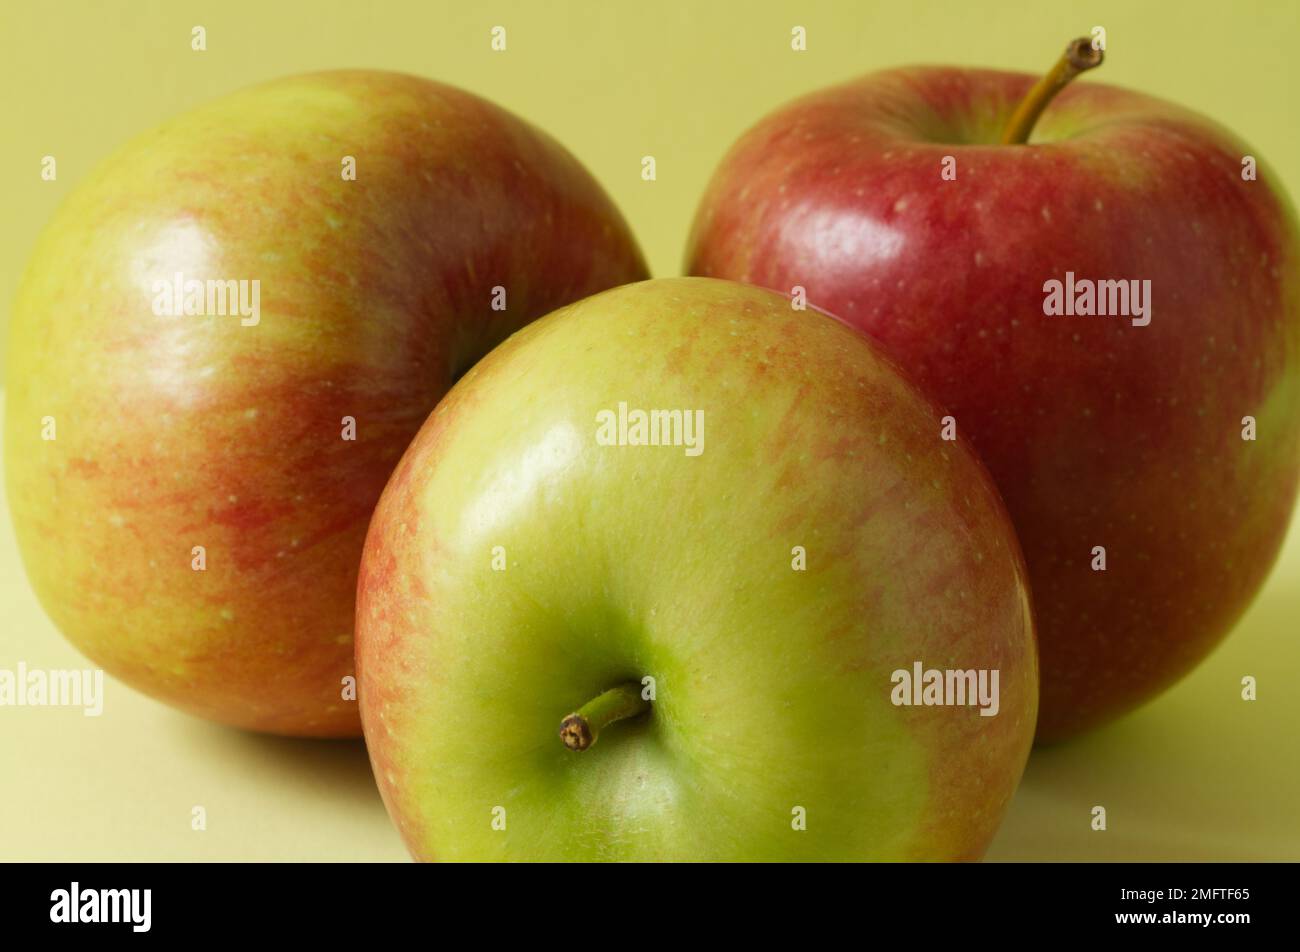 Close up of three Braeburn apples on a plain background Stock Photo